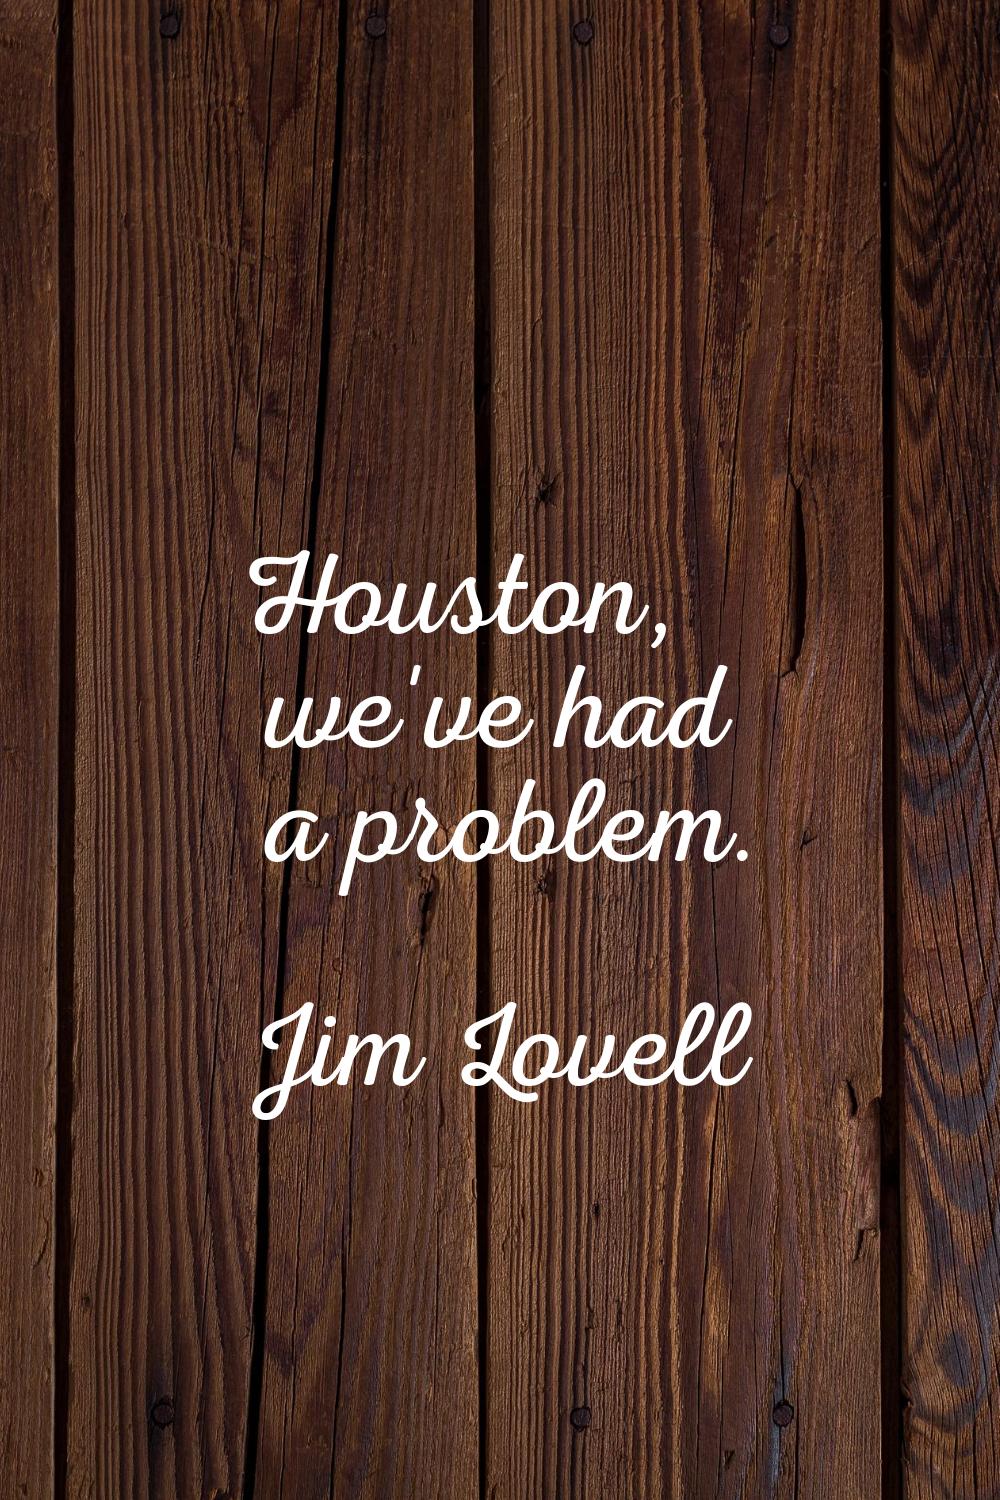 Houston, we've had a problem.